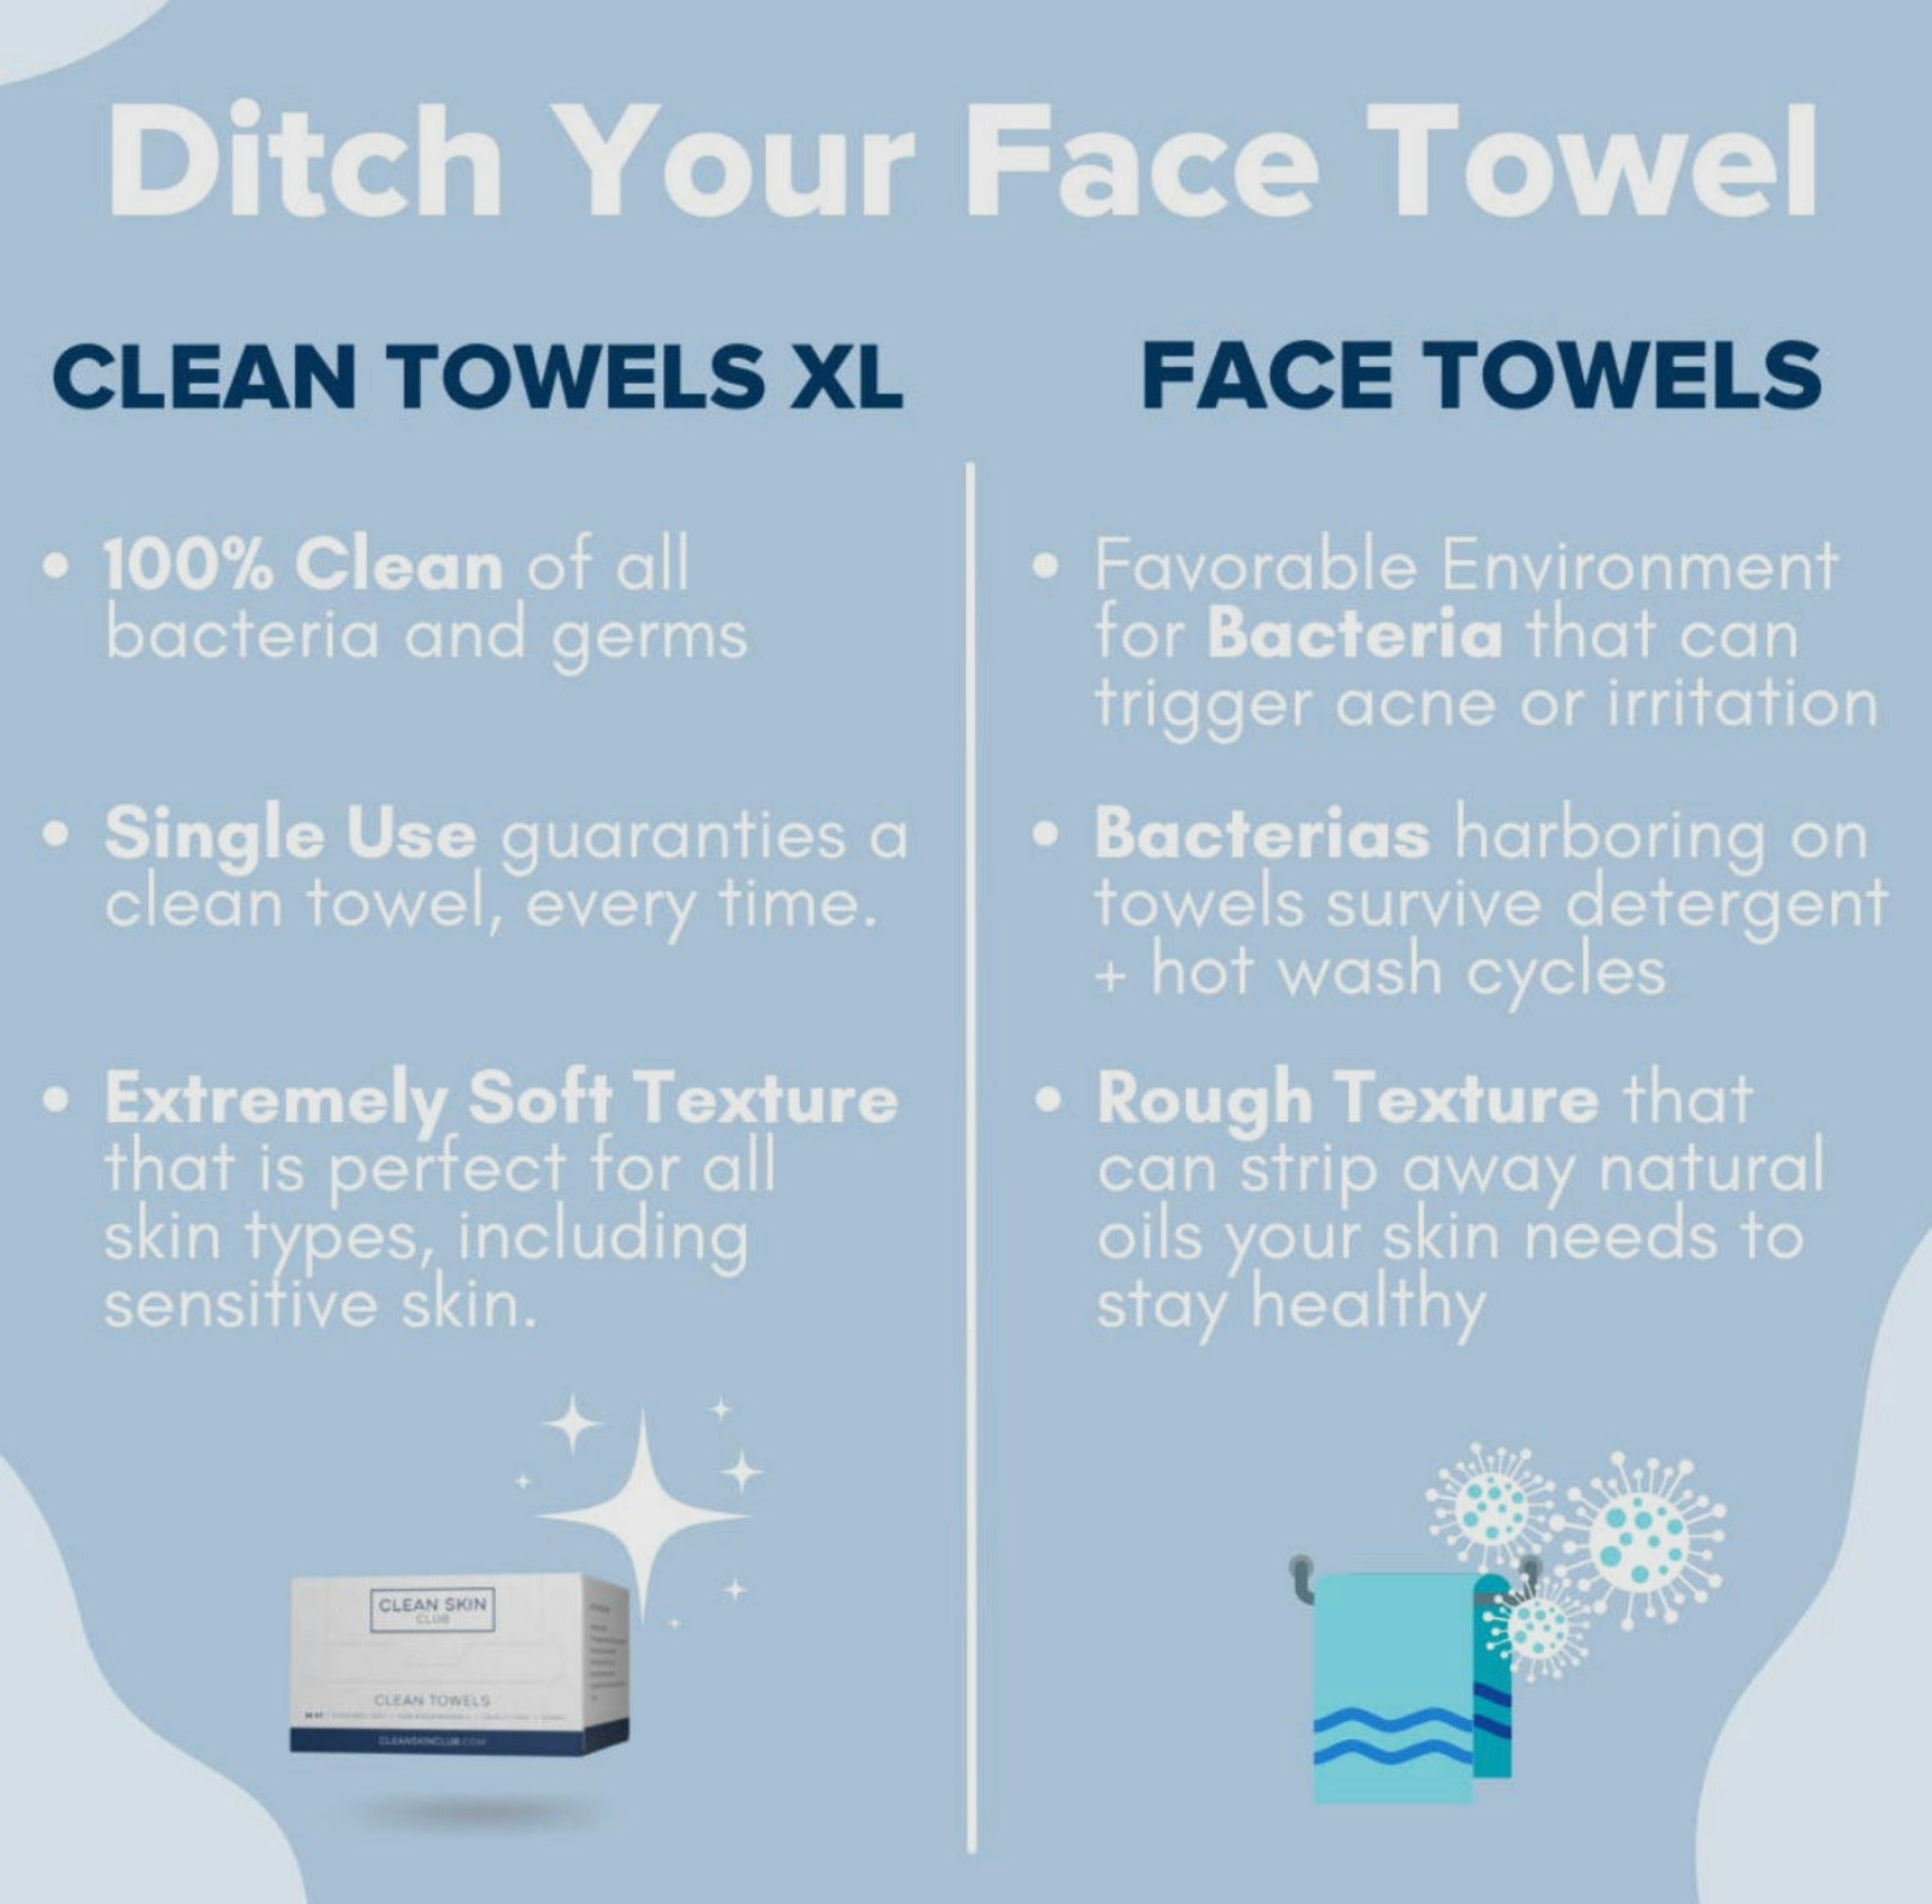 CLEAN Skin Club Face Towels XL 50ct Vegan Biodegradable Eco-Friendly